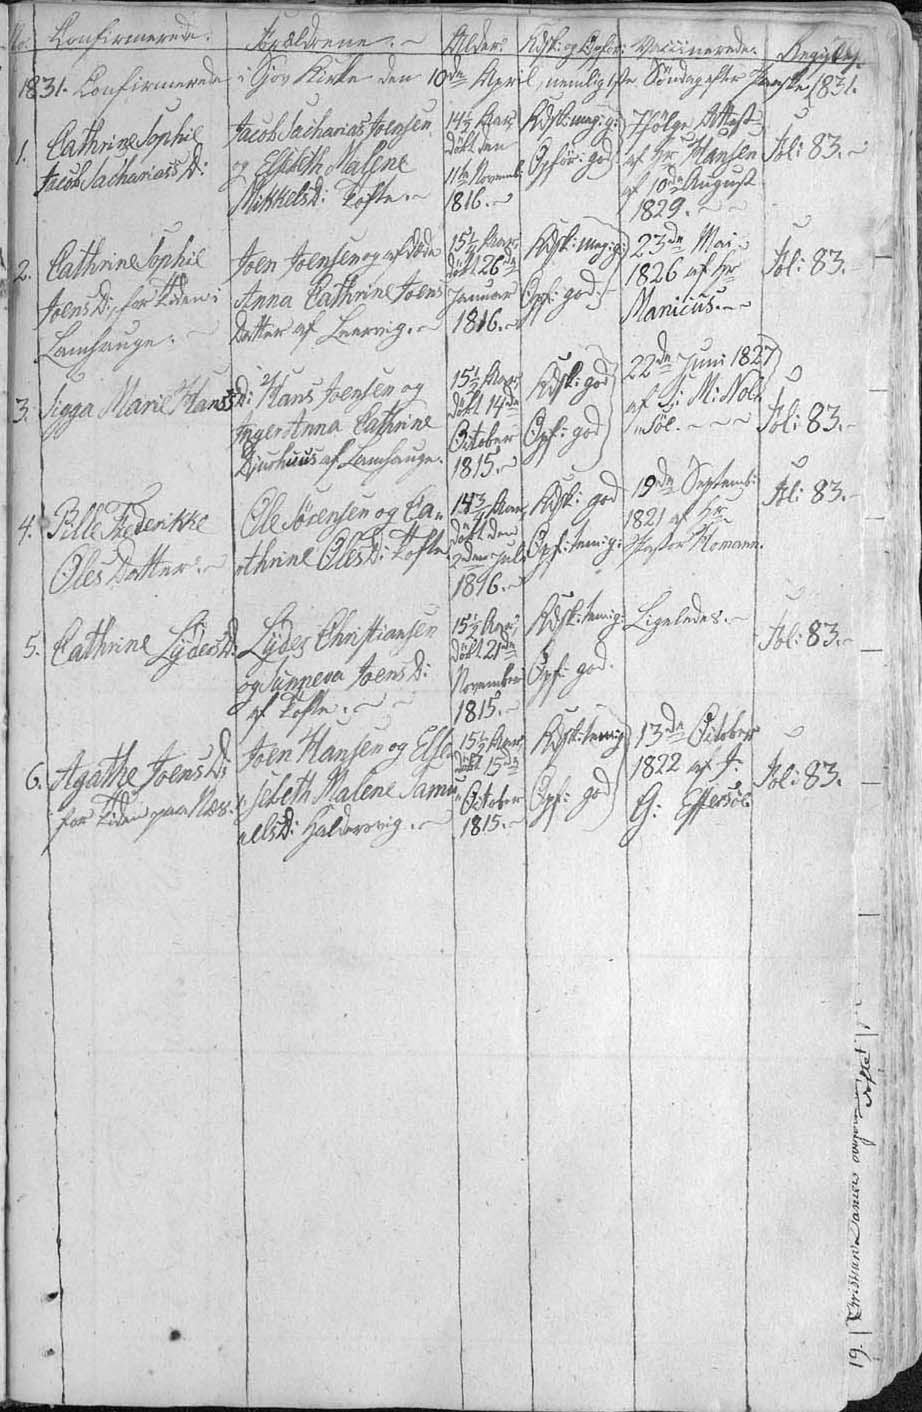 Agathe Joensdatter (1815 - 1846) - Genealogy